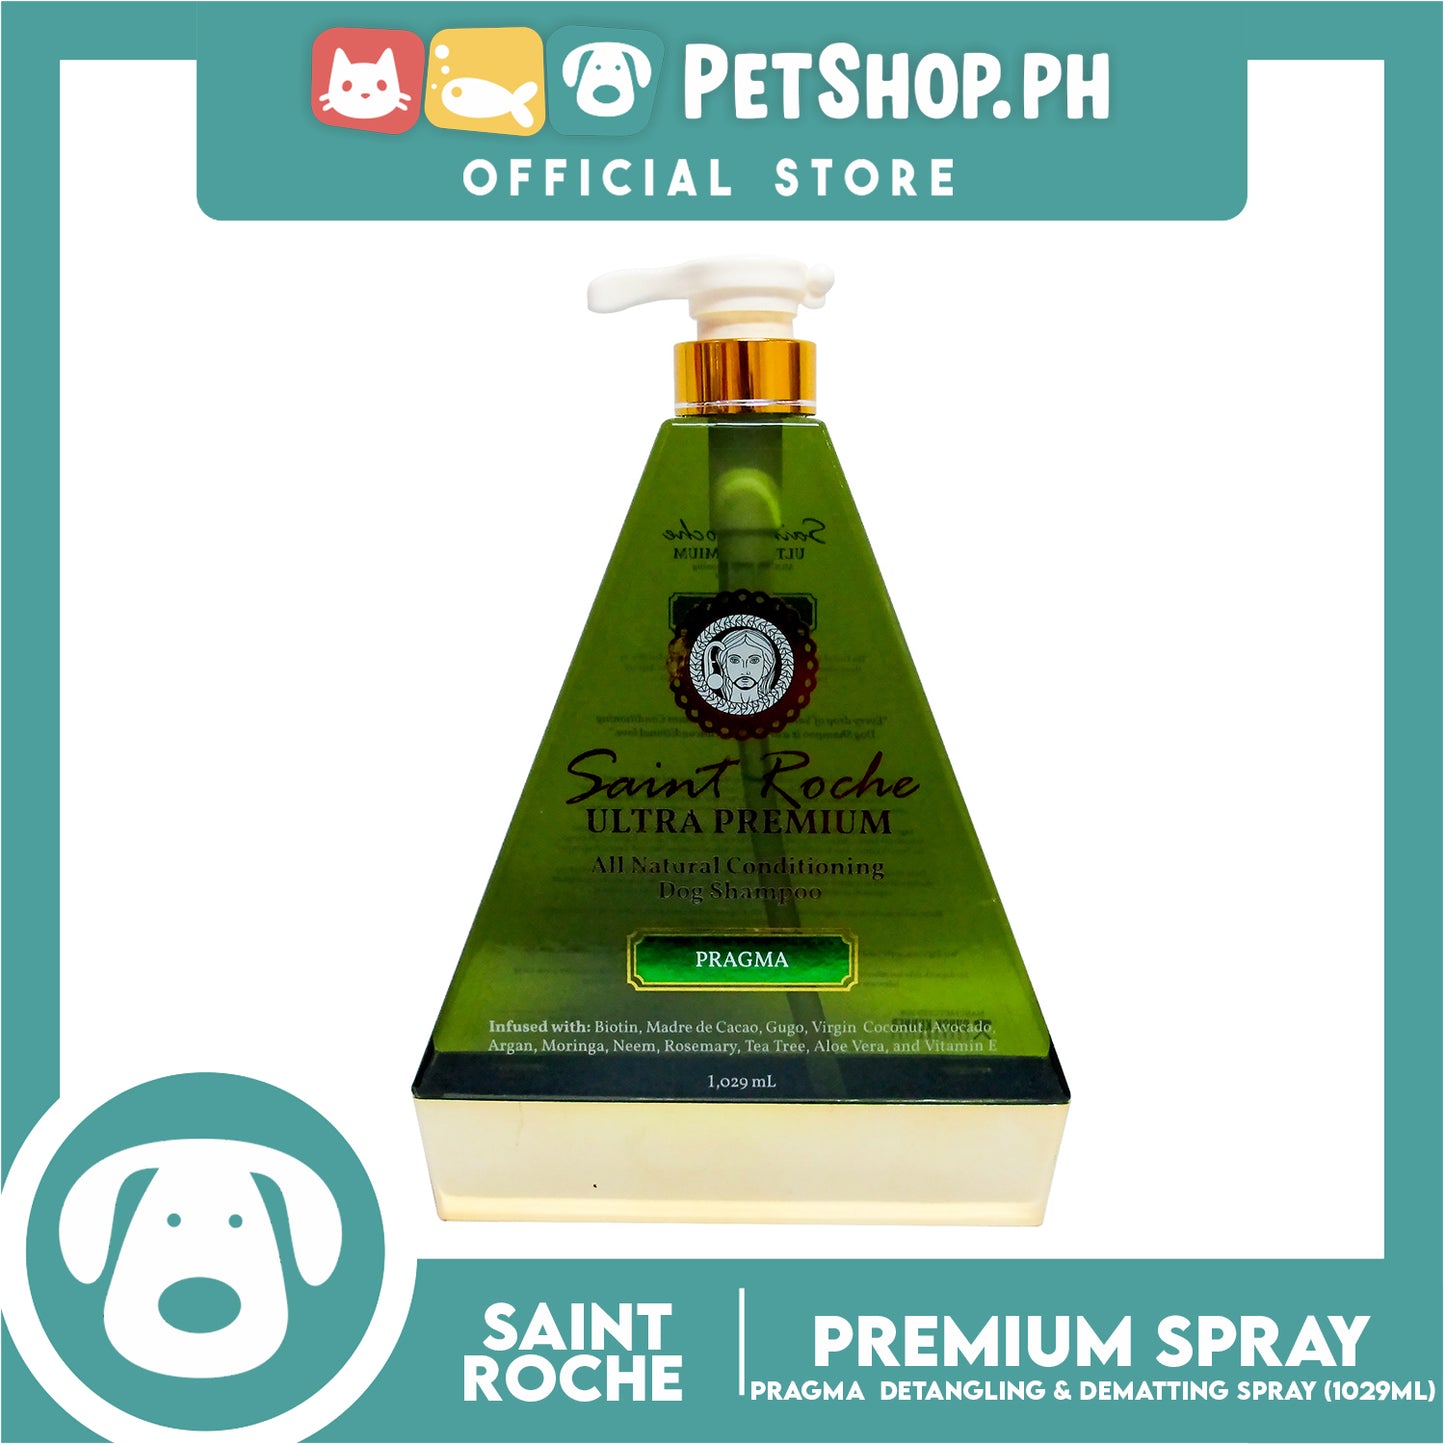 Saint Roche Ultra Premium All Natural Conditioning 1029ml (Pragma) Dog Shampoo